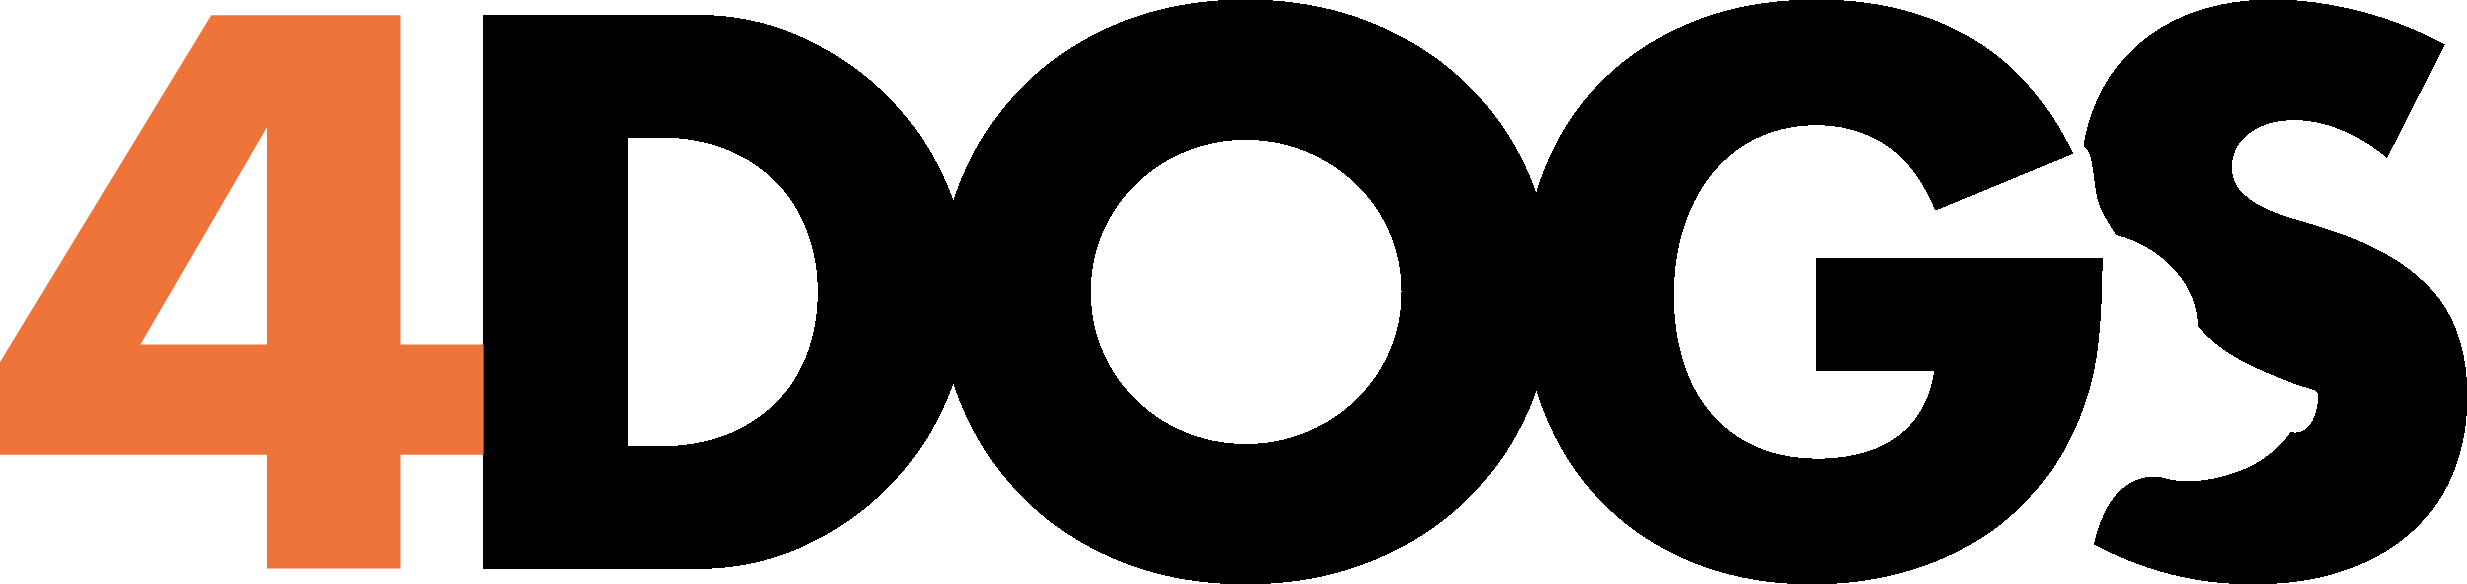 4Dogs-logga-genomskinlig-med-svart-text